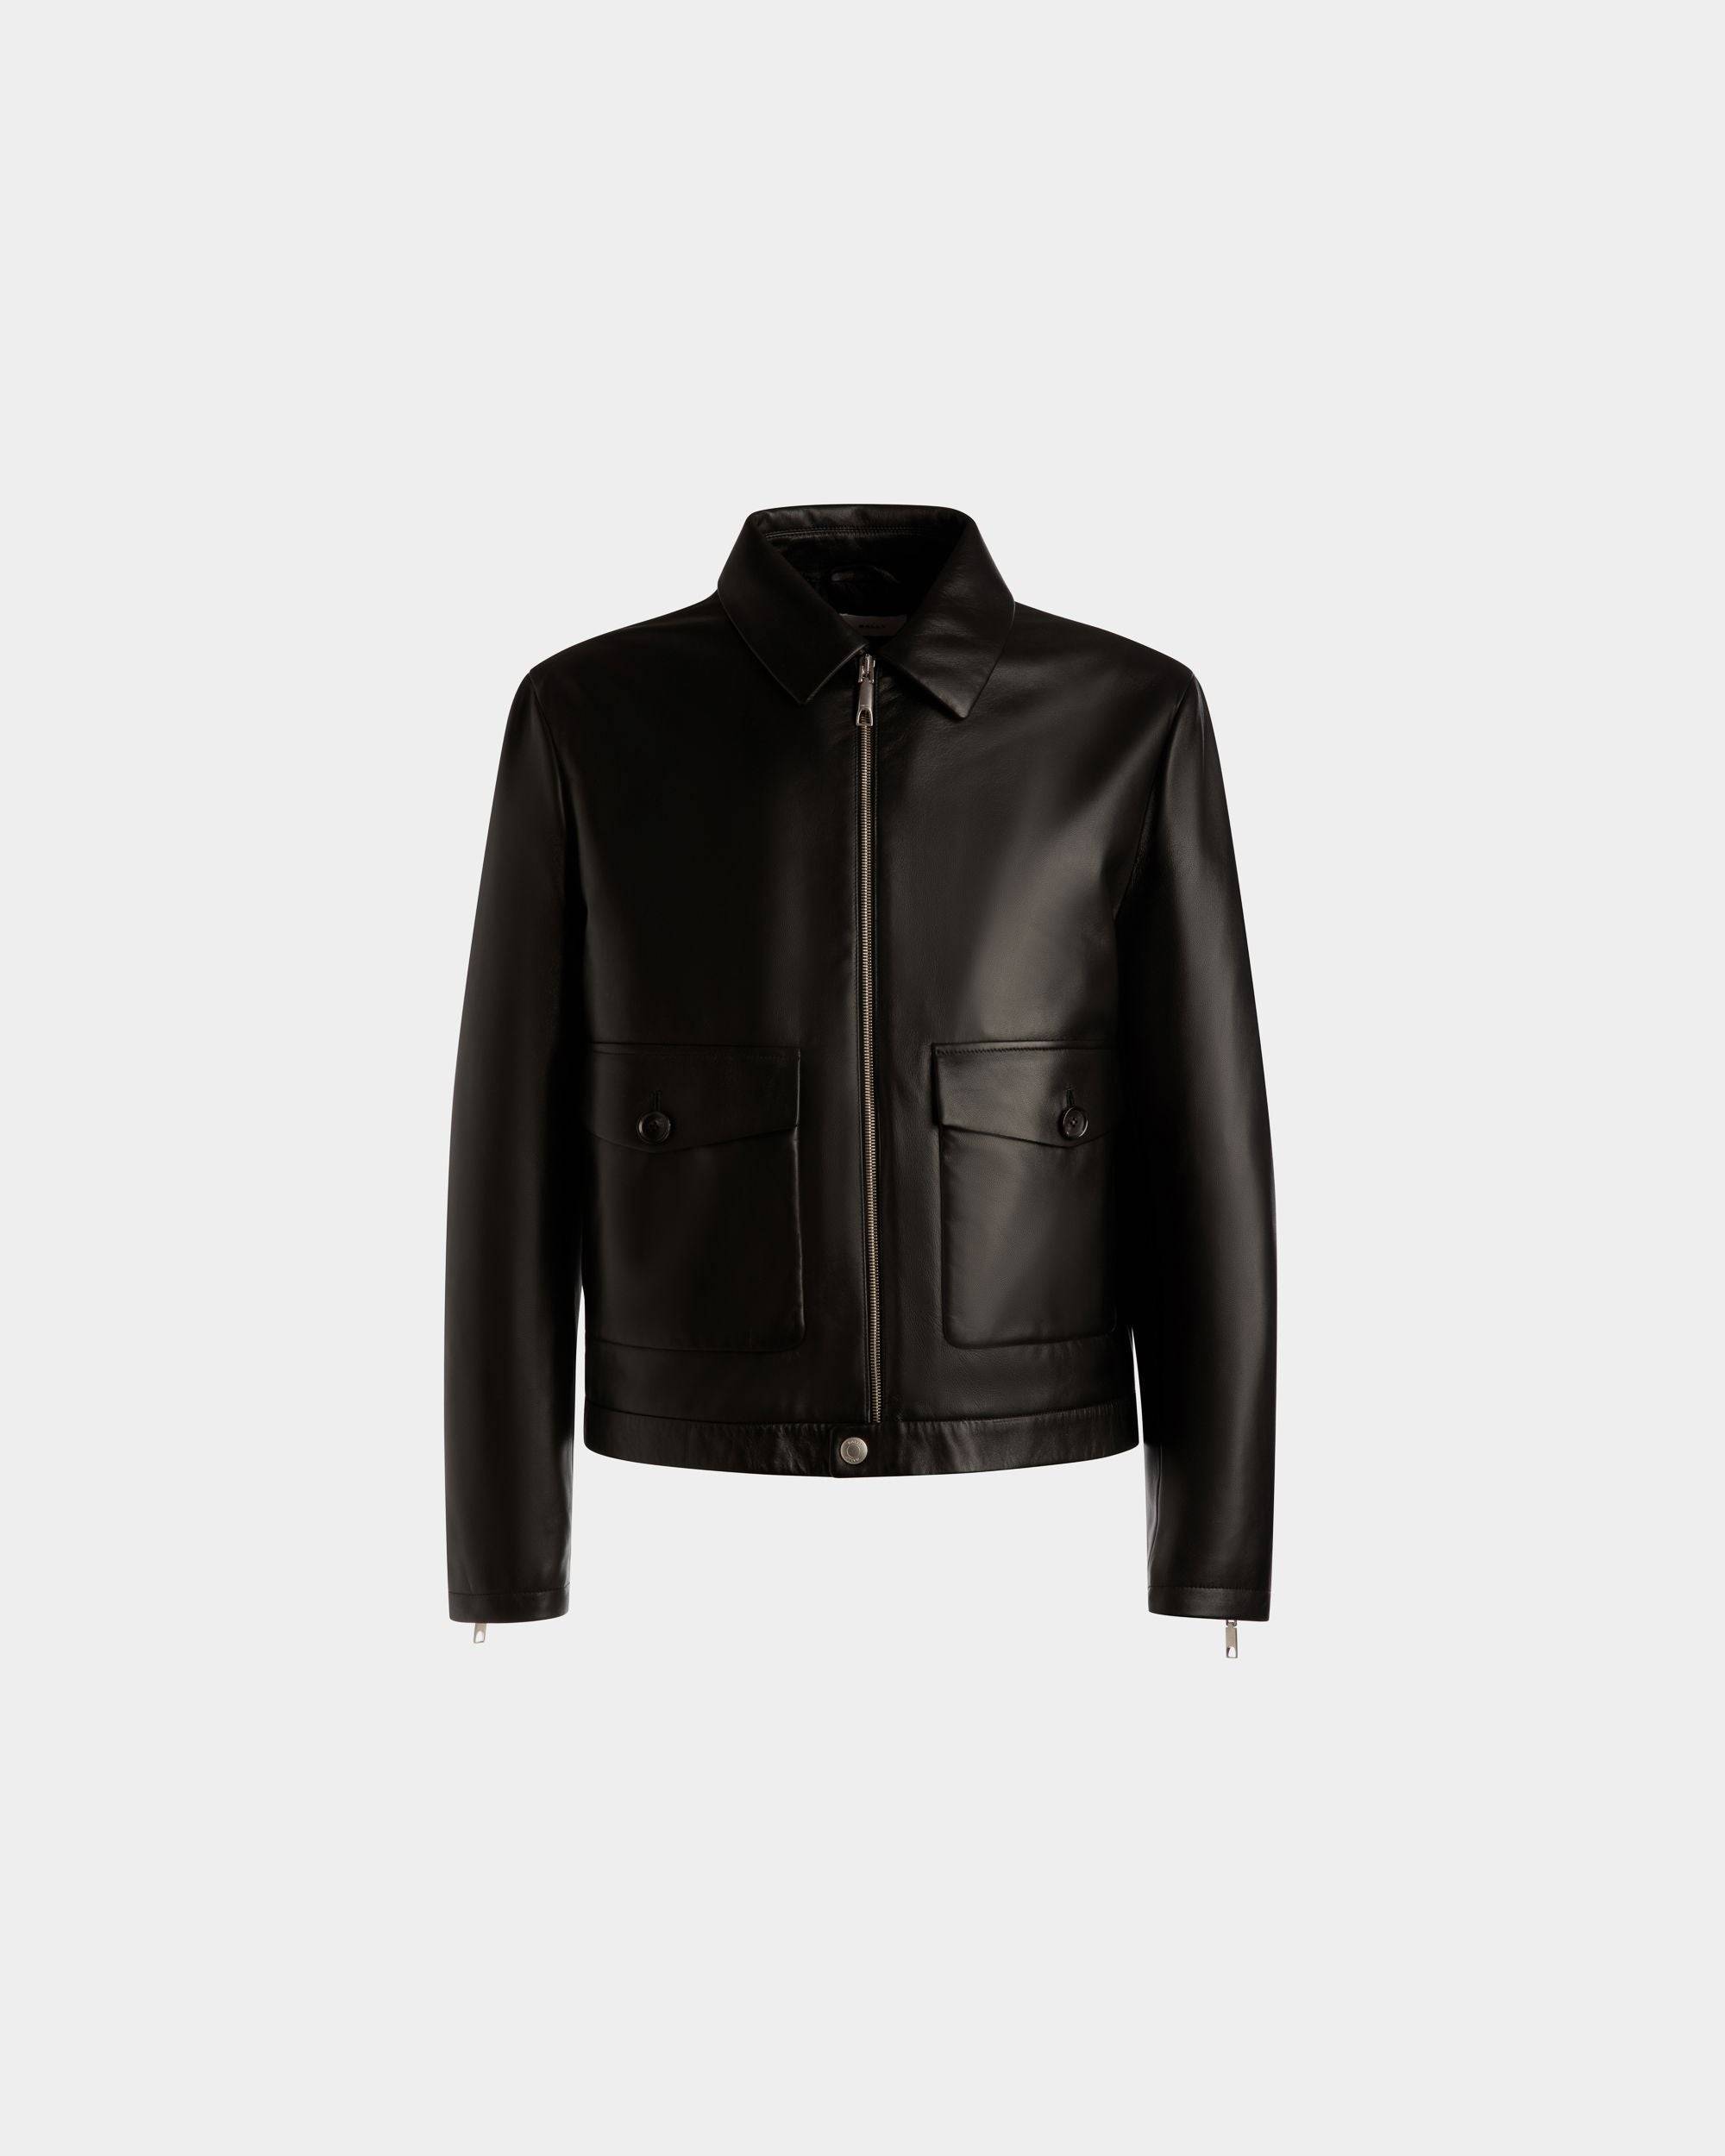 Men's Bomber Jacket In Black Leather | Bally | Still Life Front